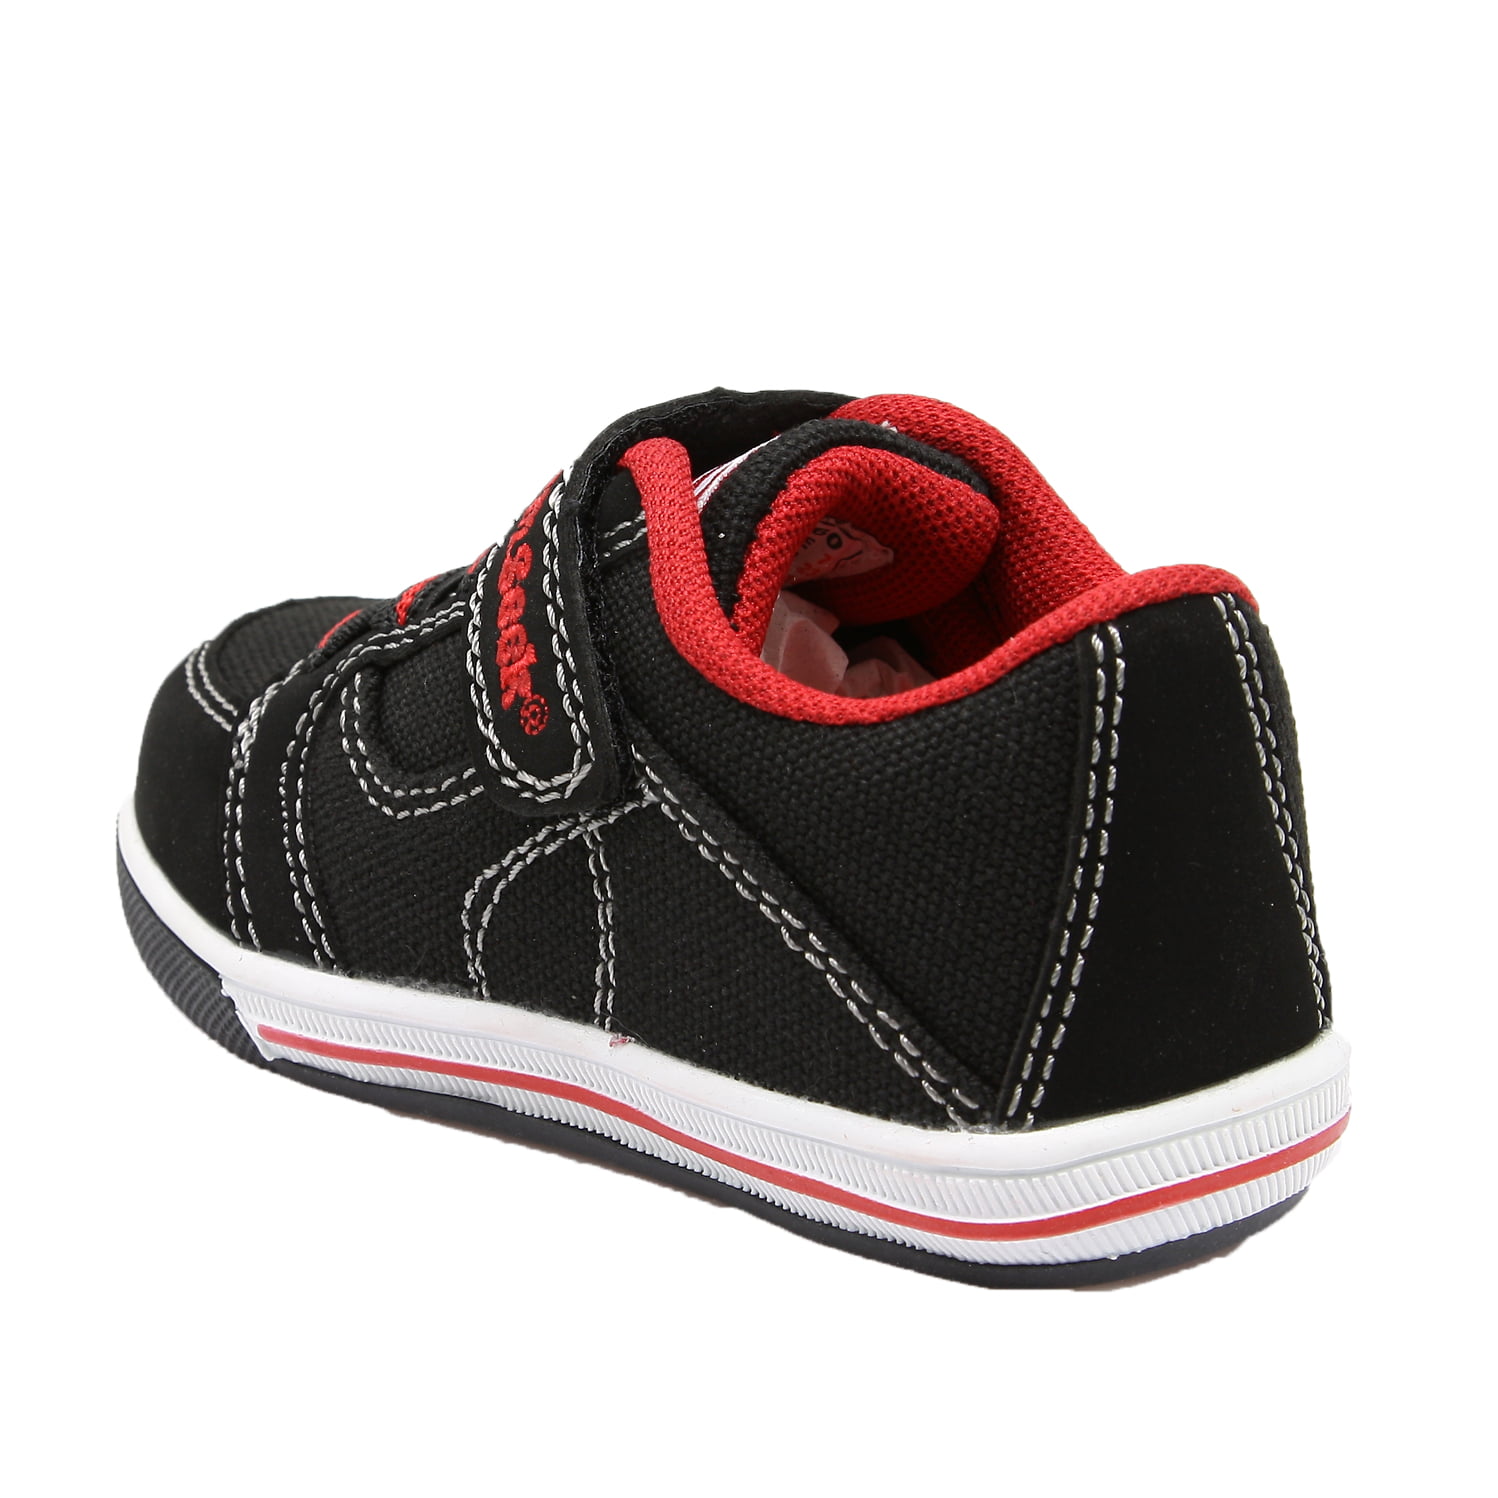 Braveman Men's Casual Slip-On Sneaker Style Comfort Loafers